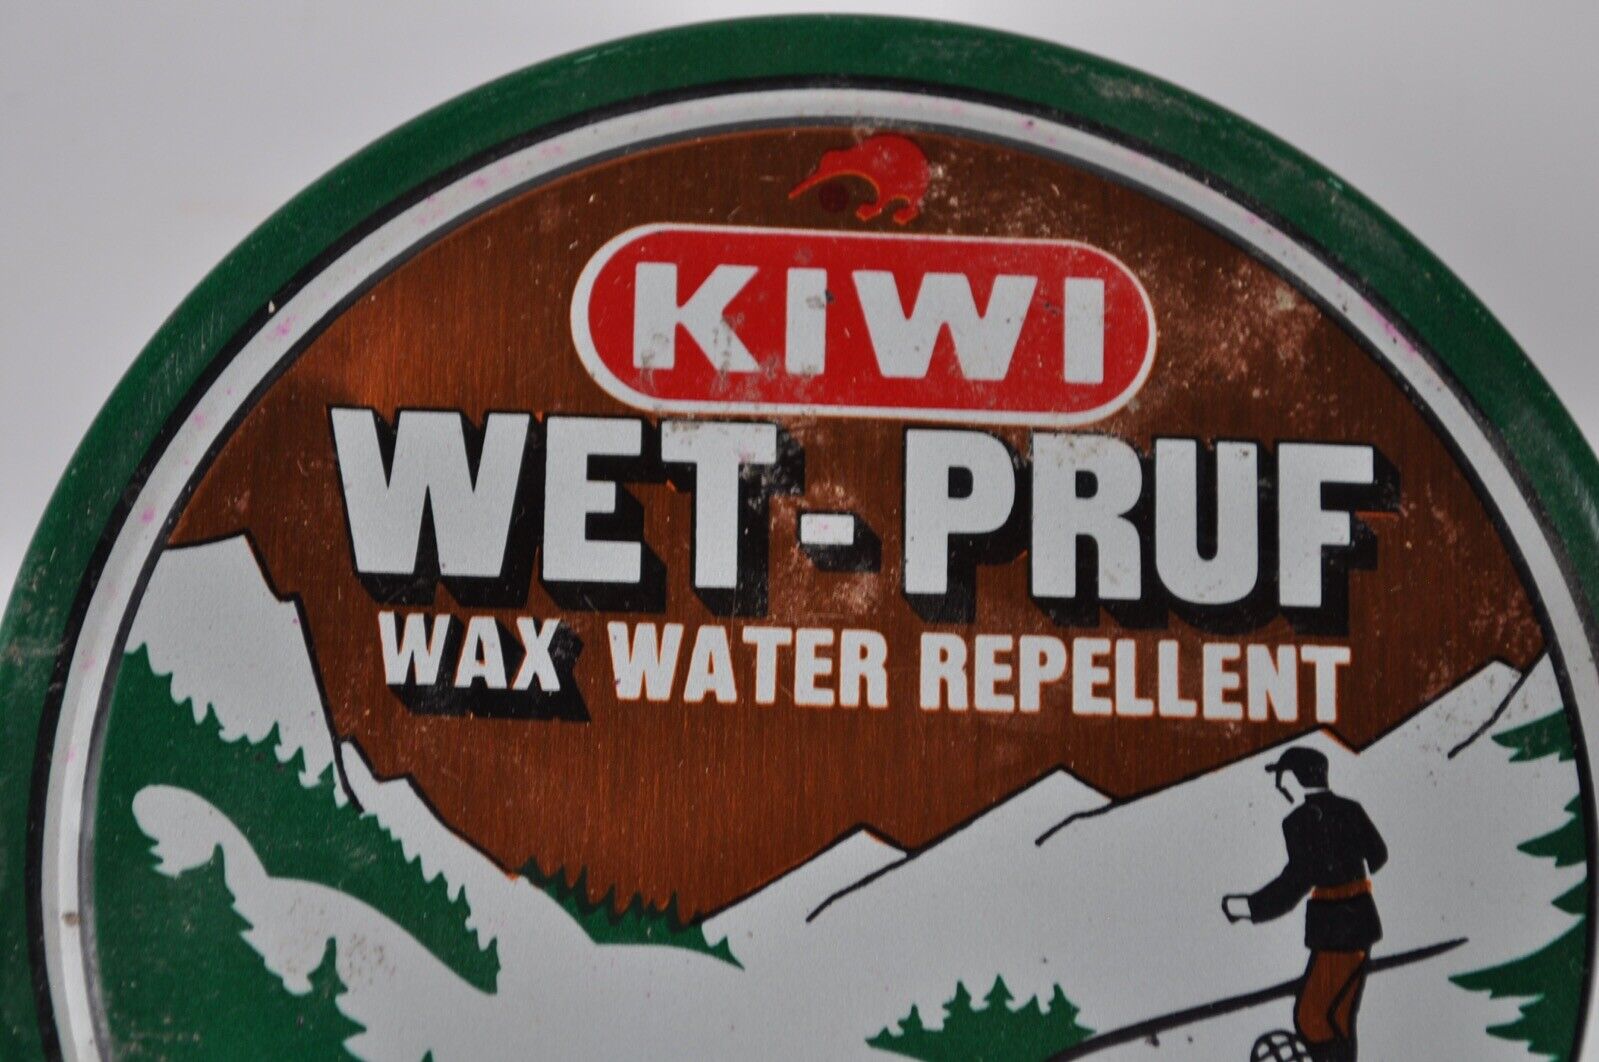 Vintage Kiwi Wet-Pruf Wax Water Repellent Waterproofs Leather USED